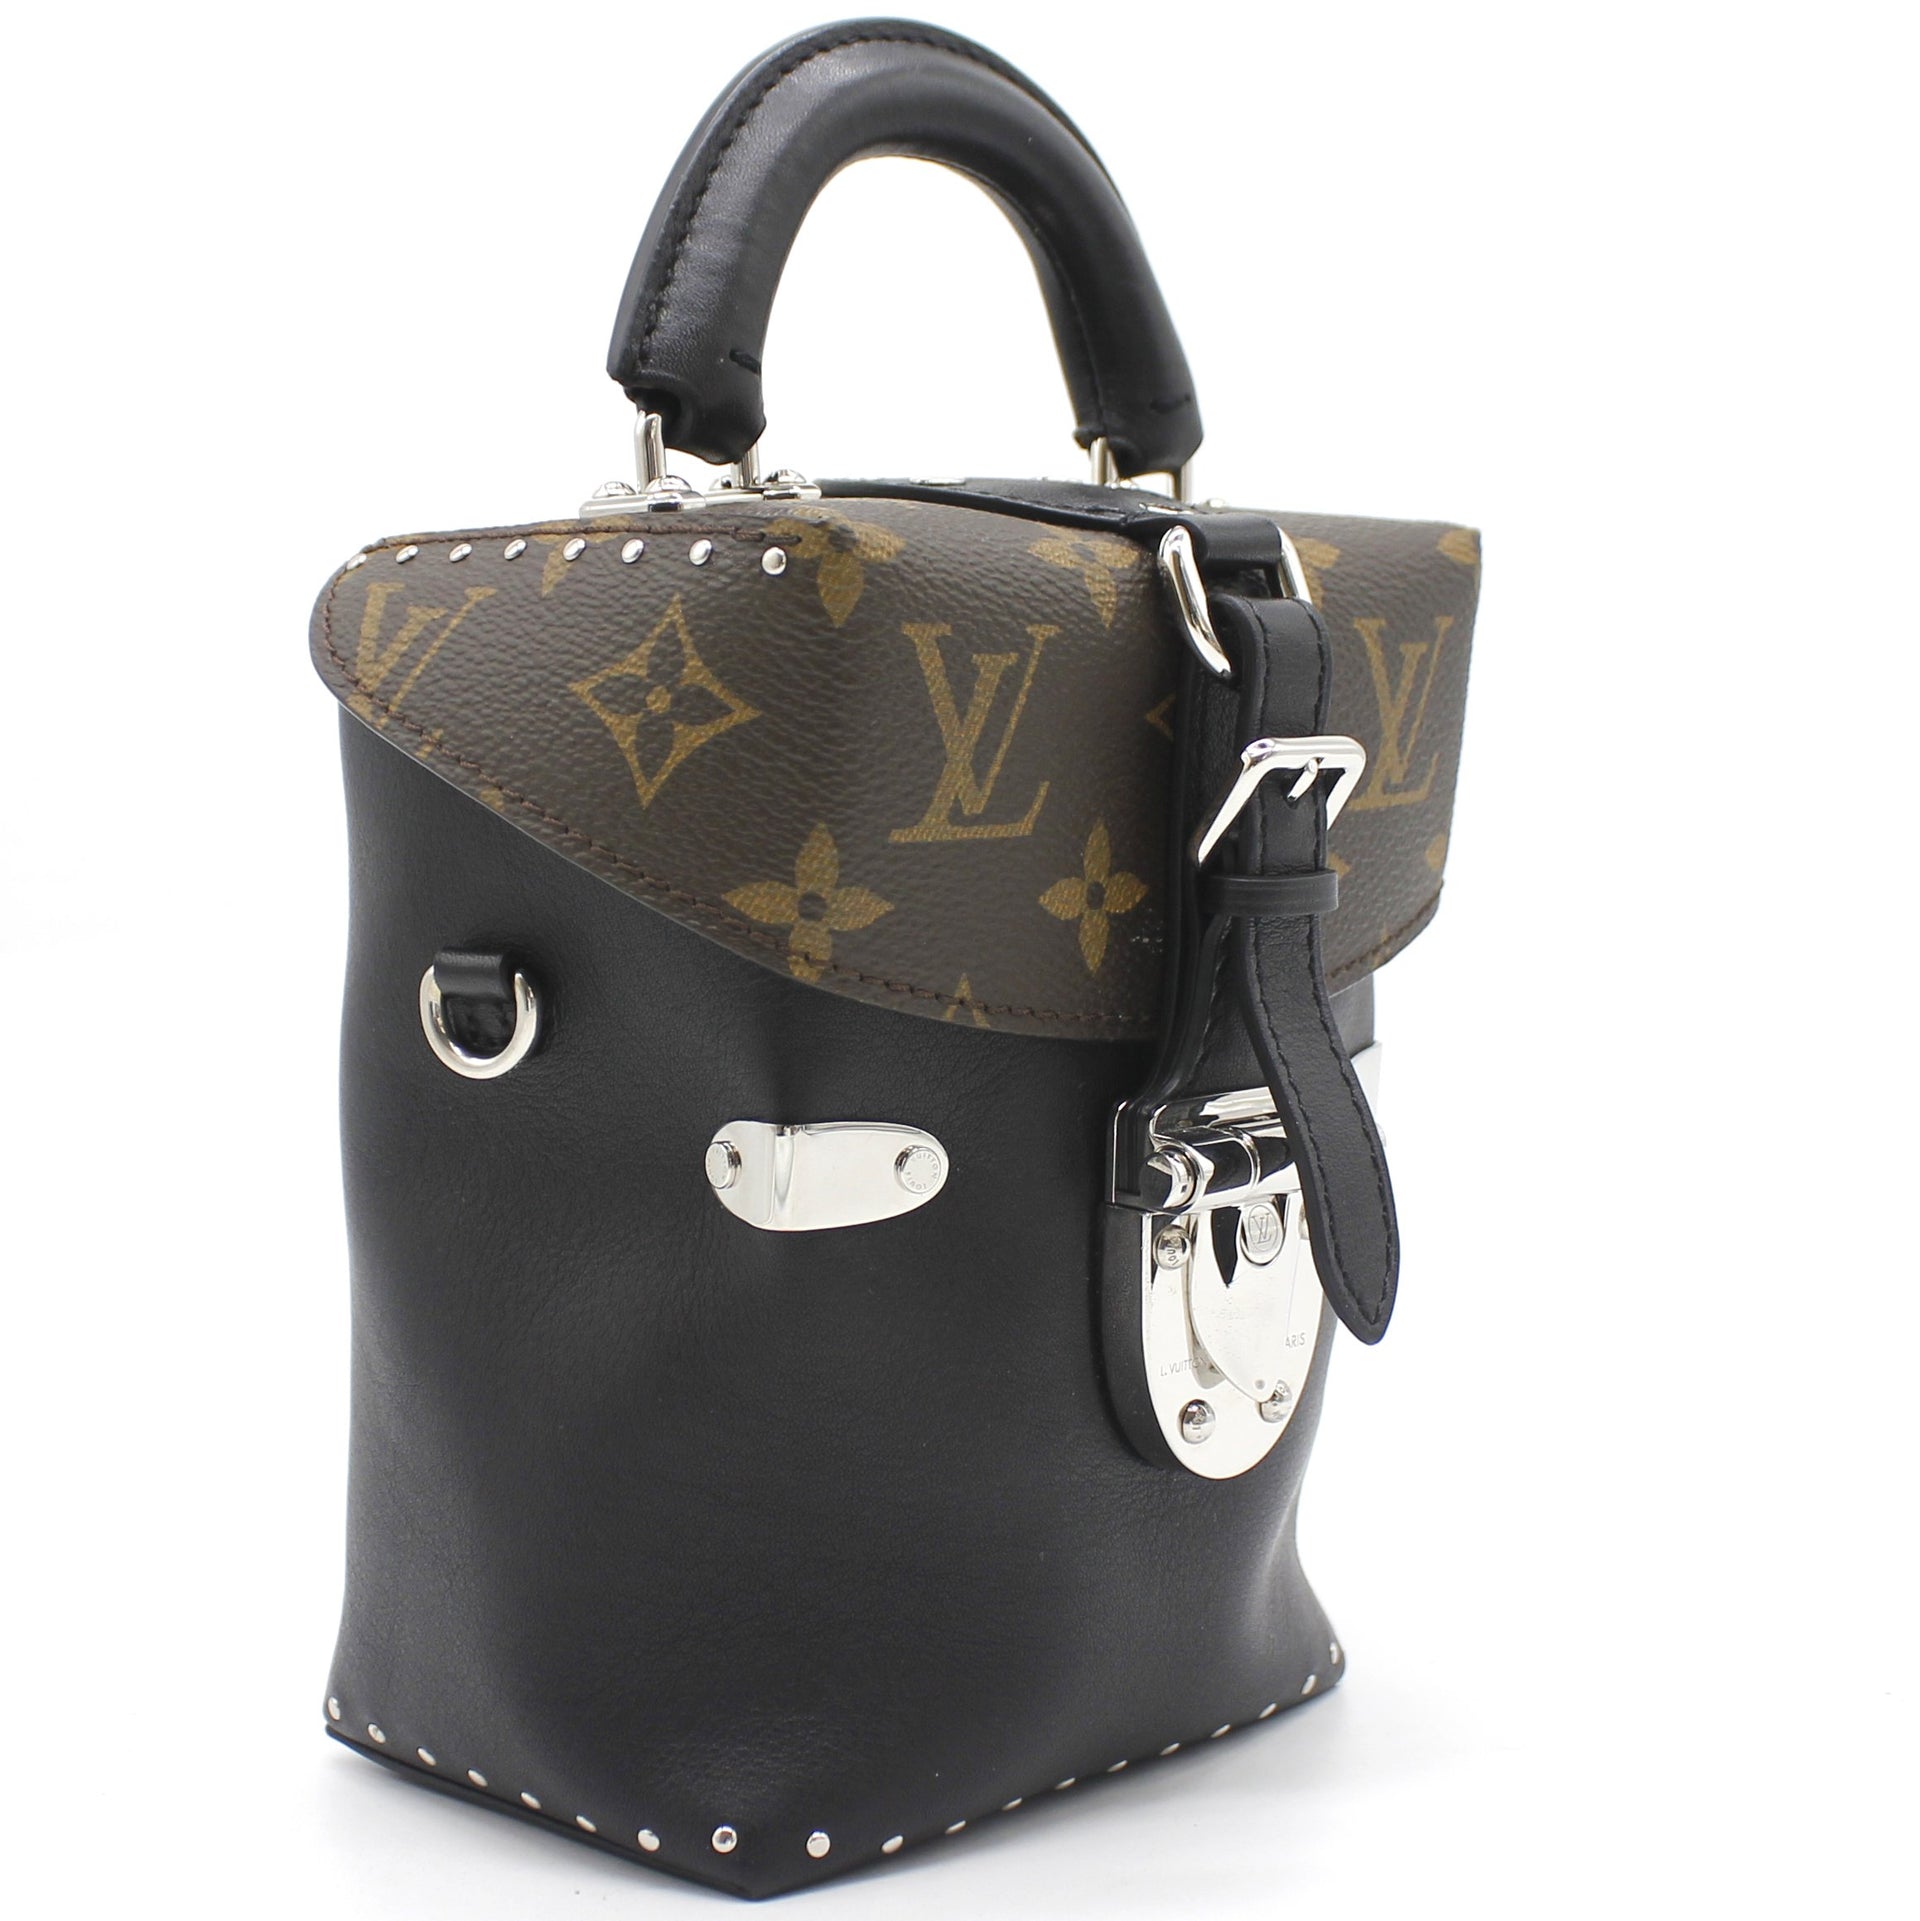 Louis+Vuitton+Camera+Box+Canvas+Top+Handle+Bag+for+Women for sale online